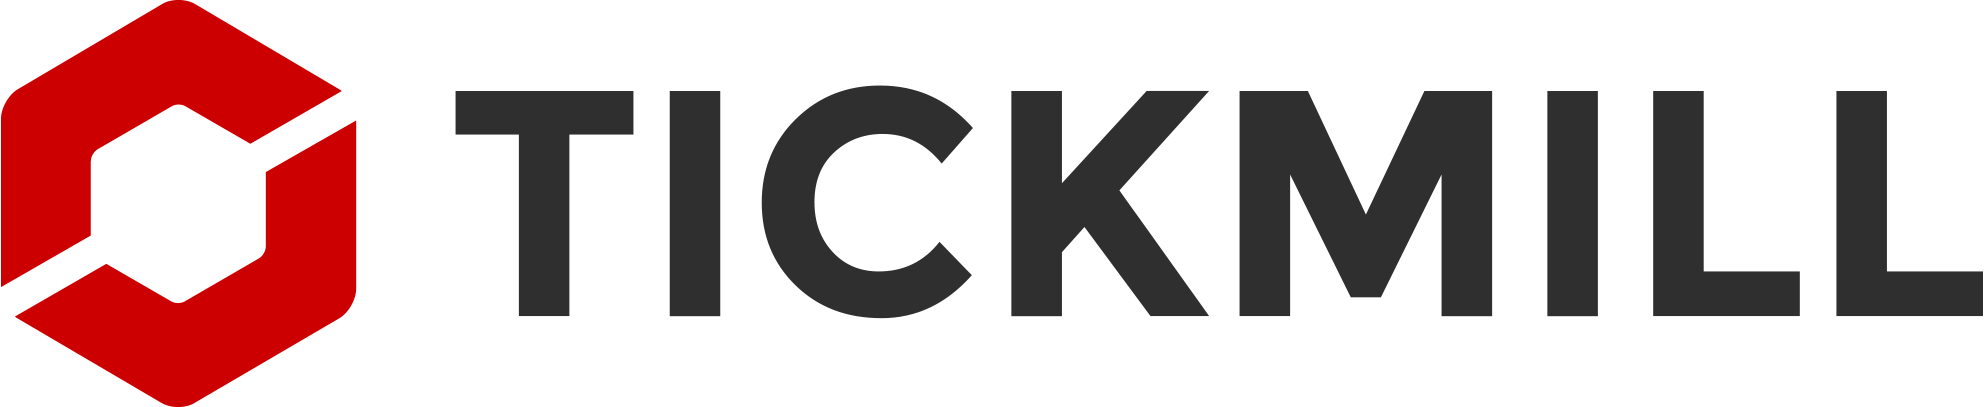 Tickmill_logo